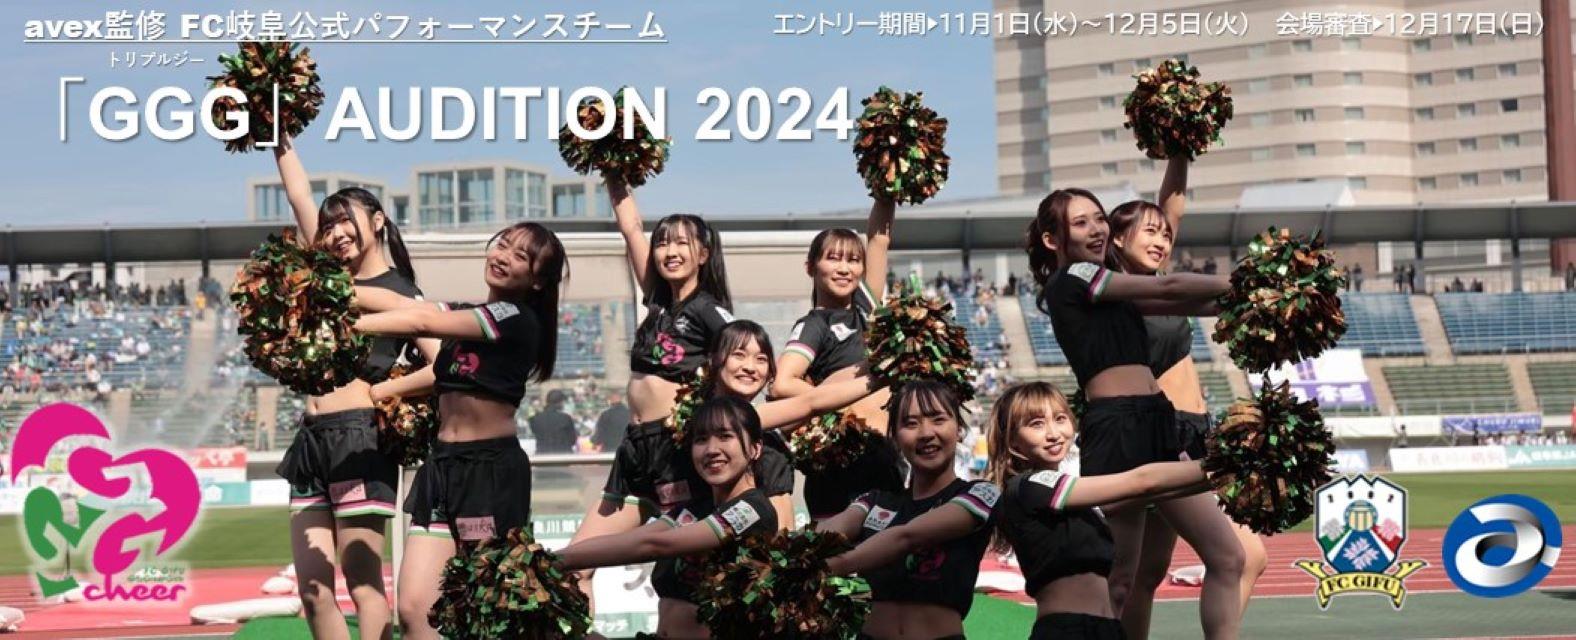 FC岐阜×avex GGG AUDITION 2024